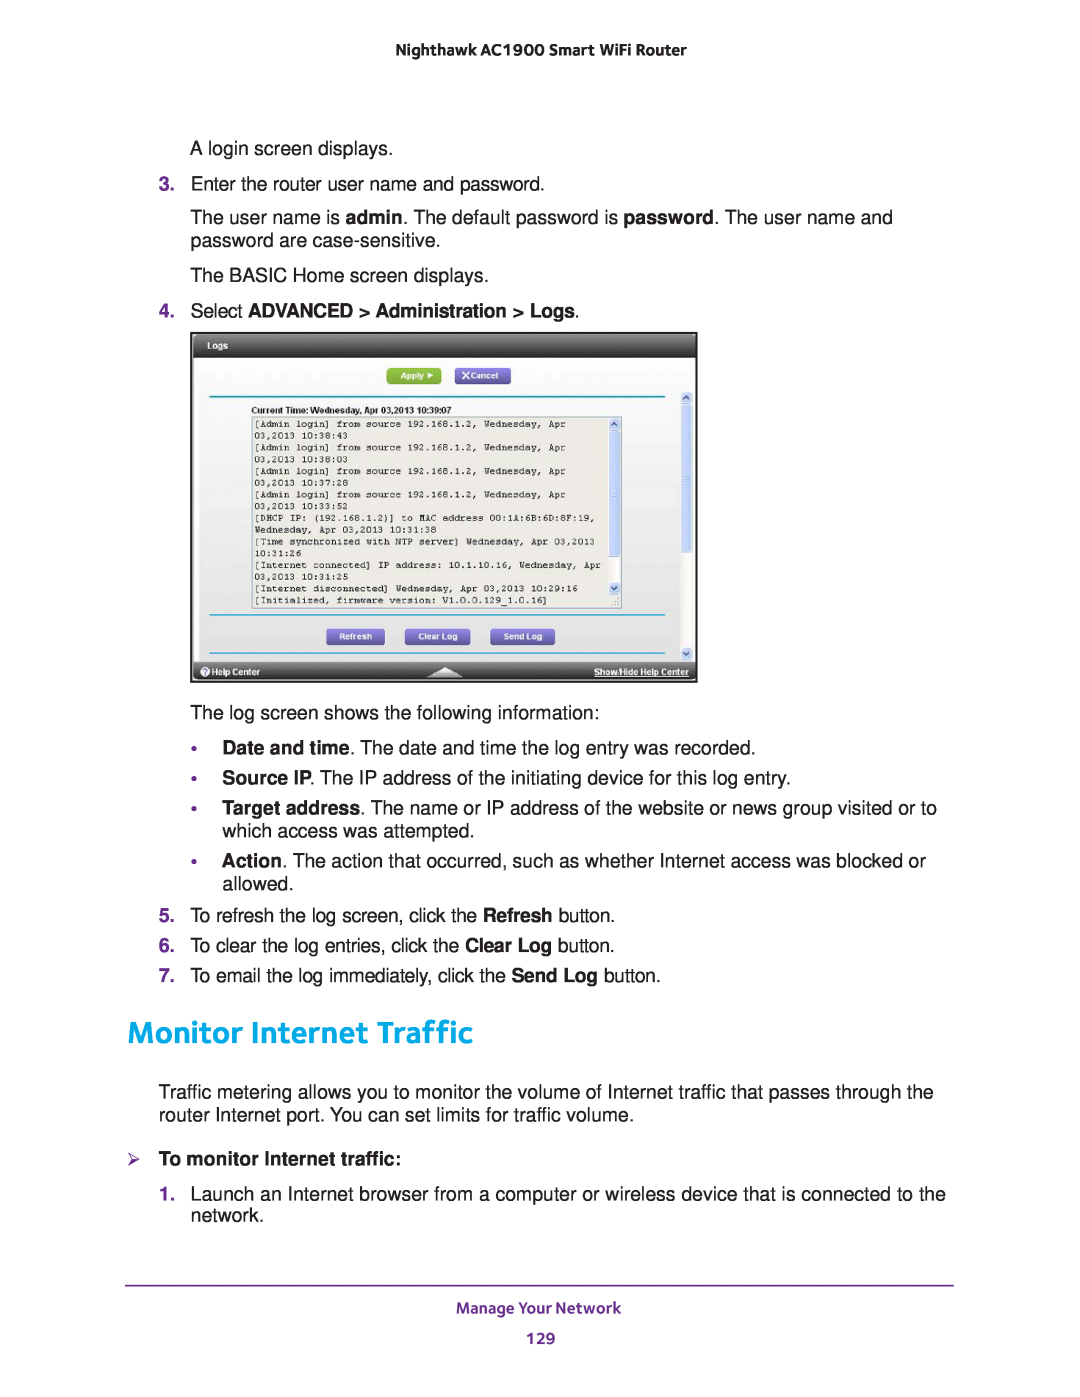 NETGEAR Model R7000 Monitor Internet Traffic, Select ADVANCED Administration Logs,  To monitor Internet traffic 